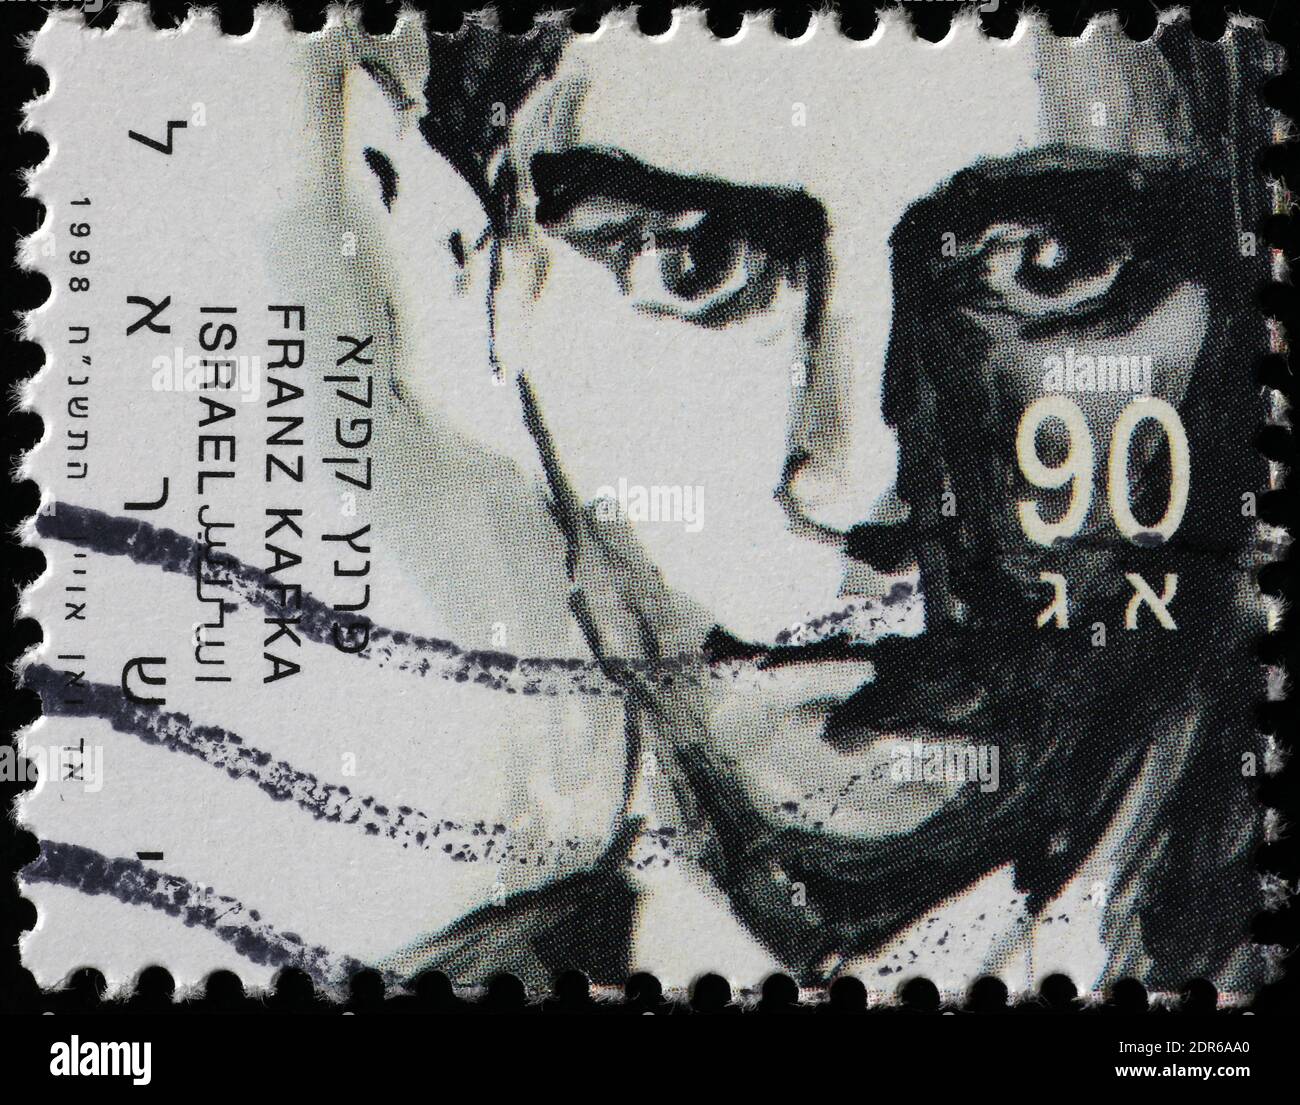 Franz Kafka en el sello postal israelí Foto de stock